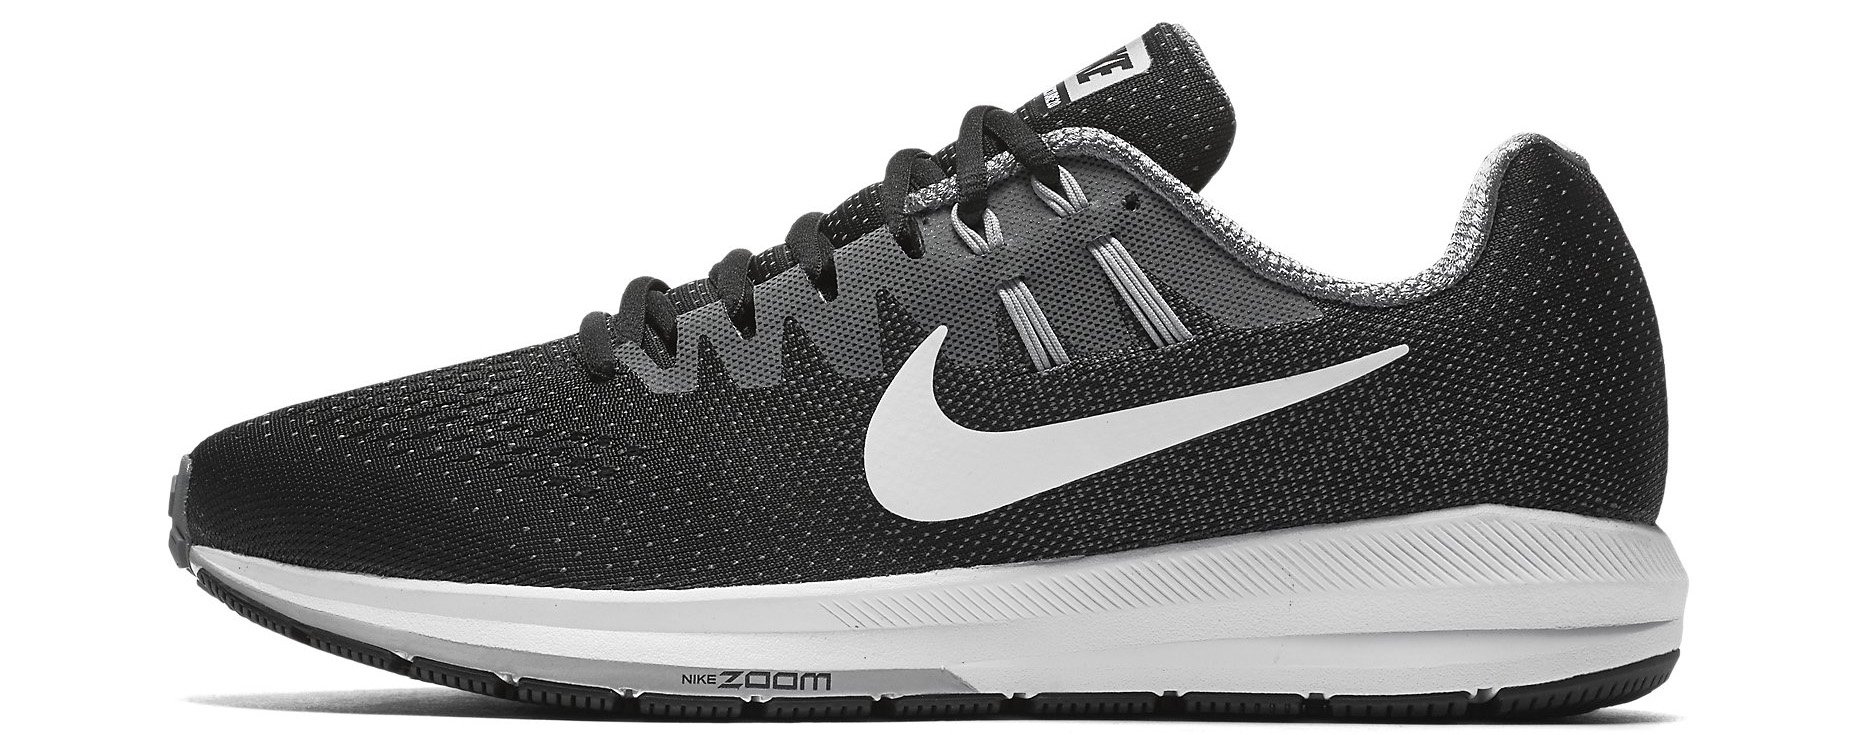 Pánské běžecké boty Nike Air Zoom Structure 20